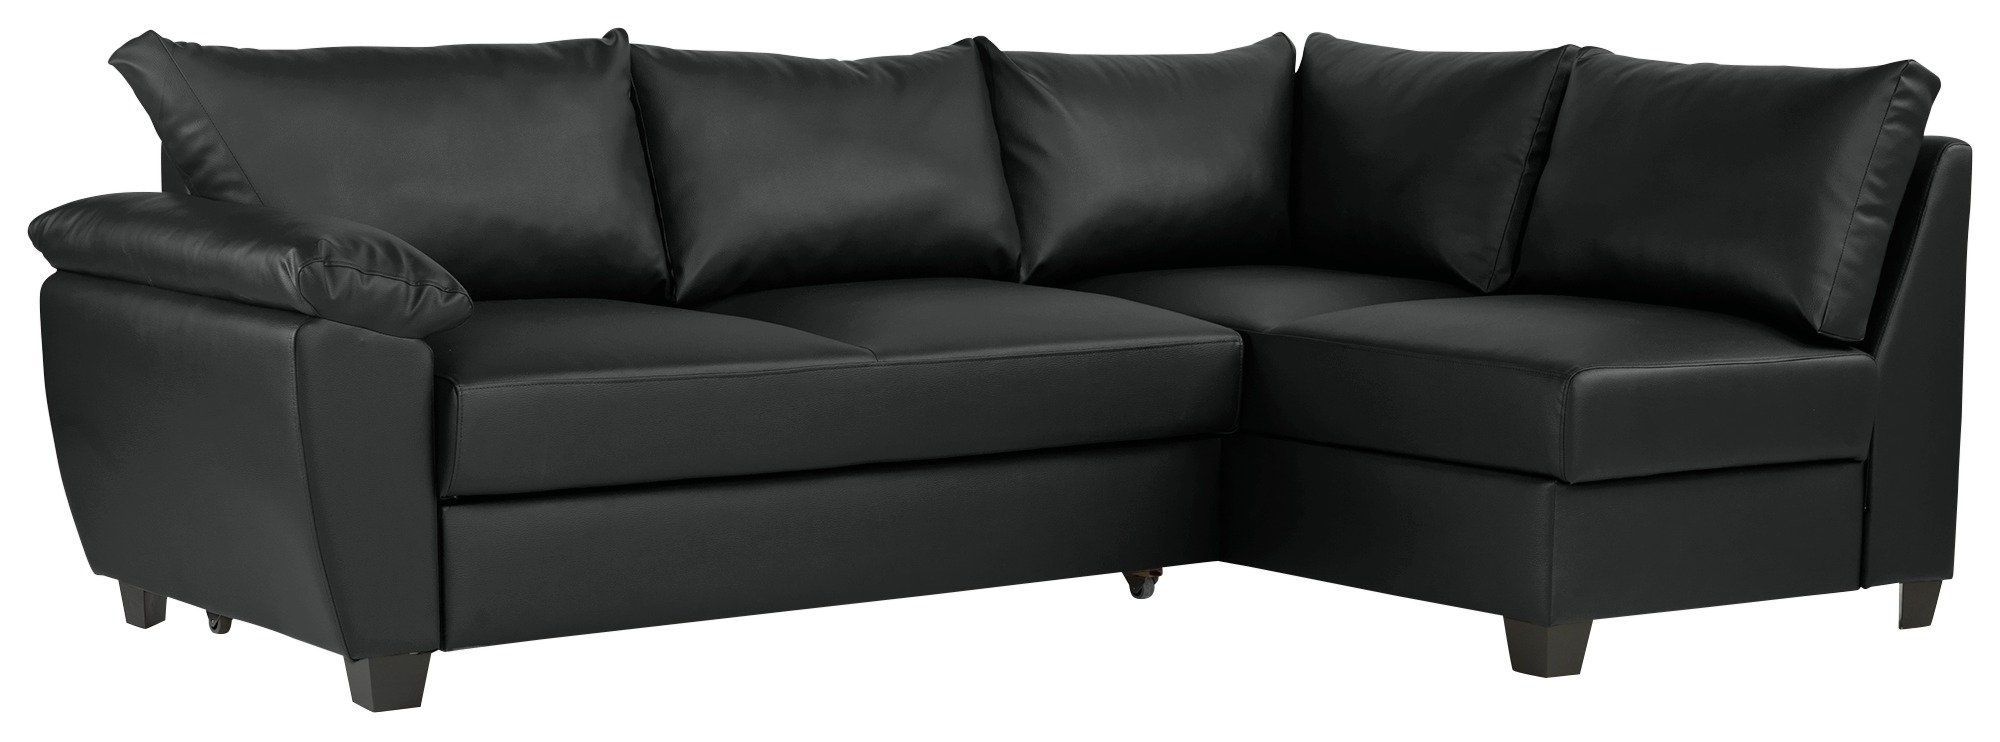 argos corner sofa beds